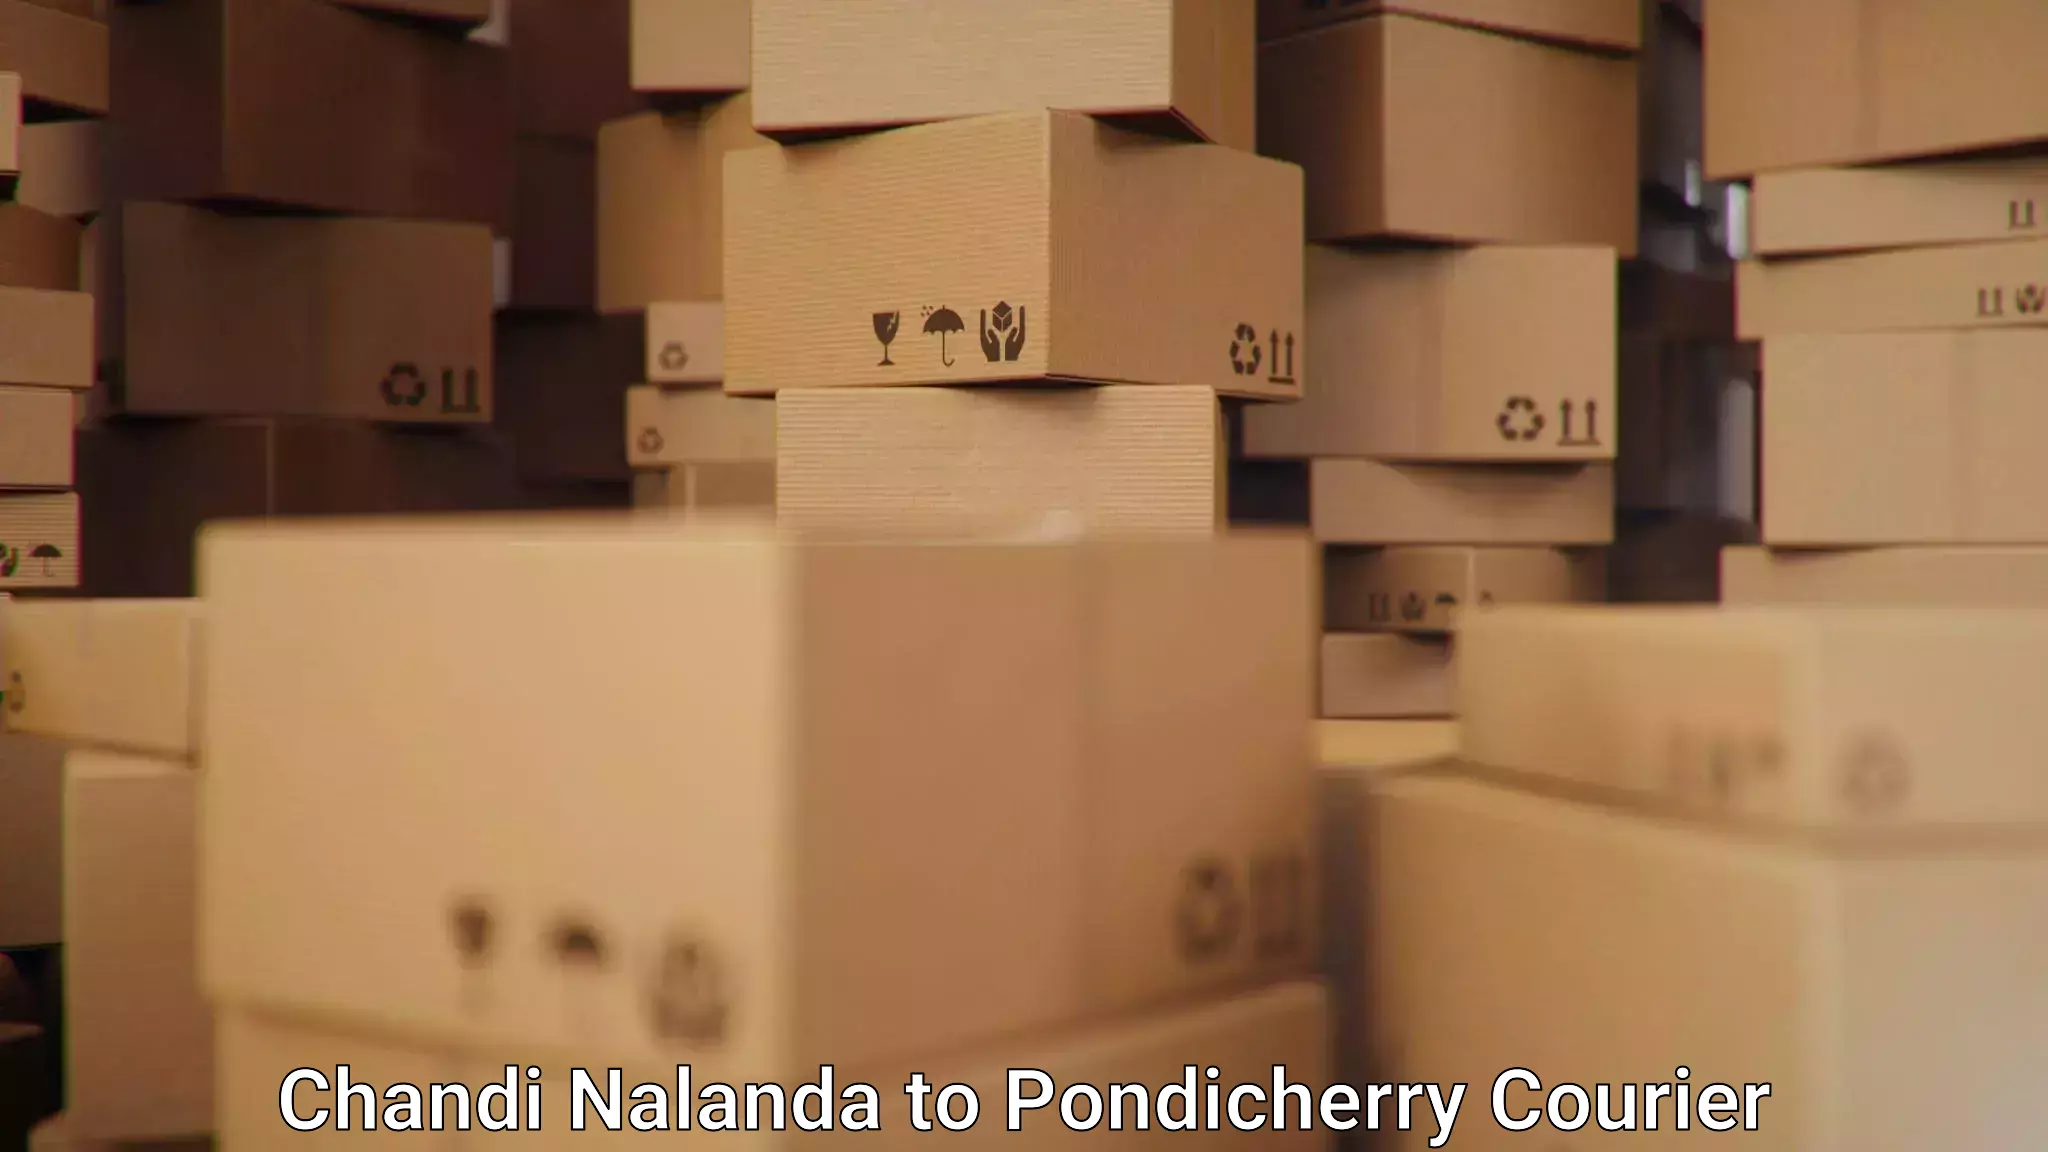 Courier service innovation Chandi Nalanda to Pondicherry University